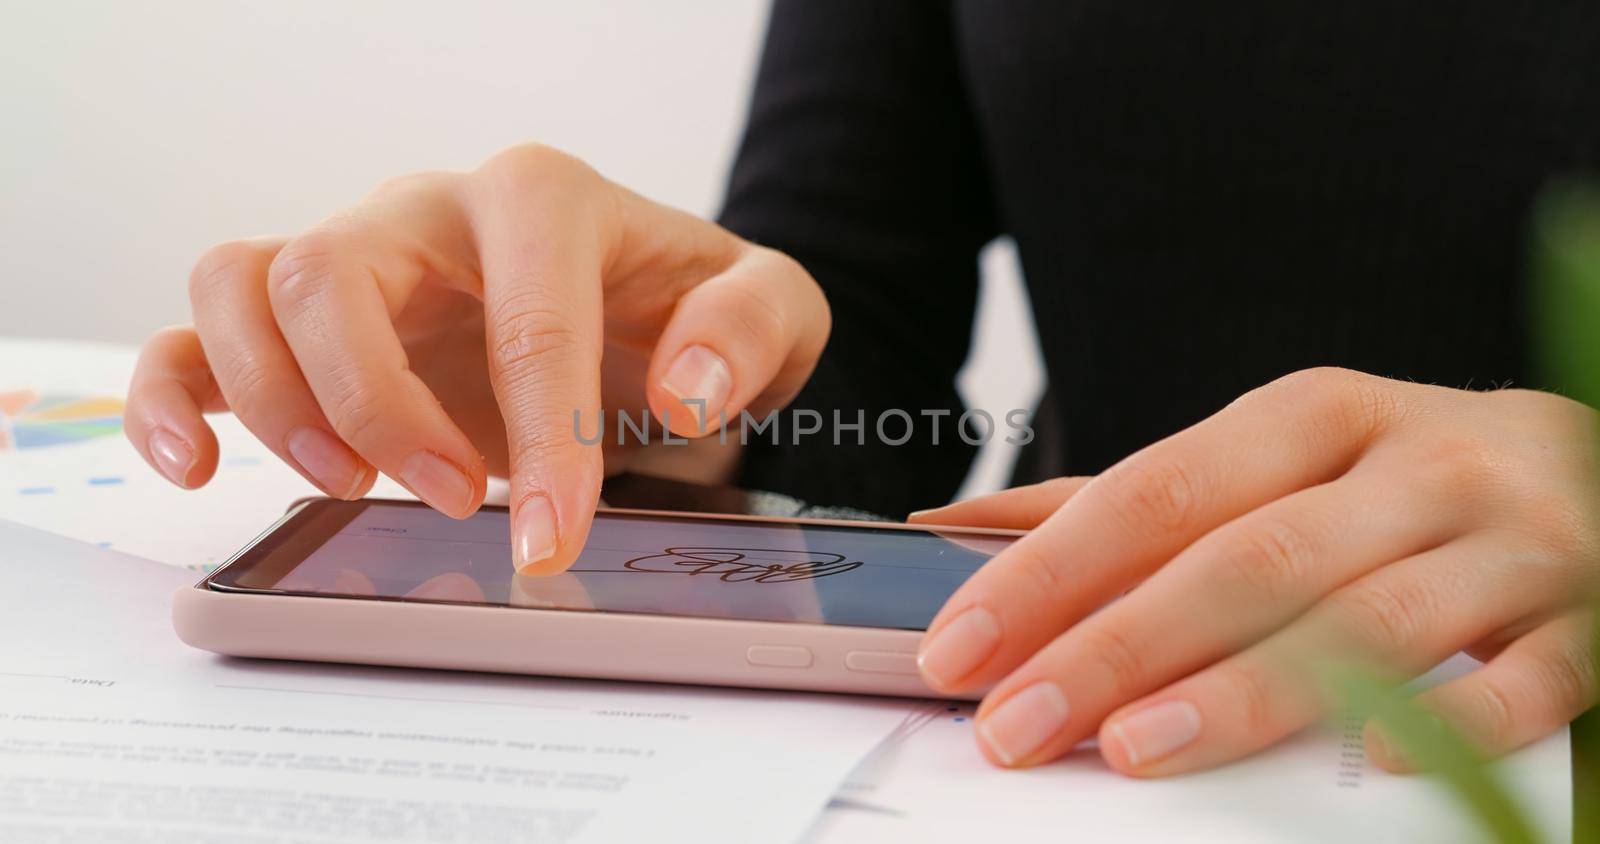 Digital signature on phone, electronic signature concept by RecCameraStock